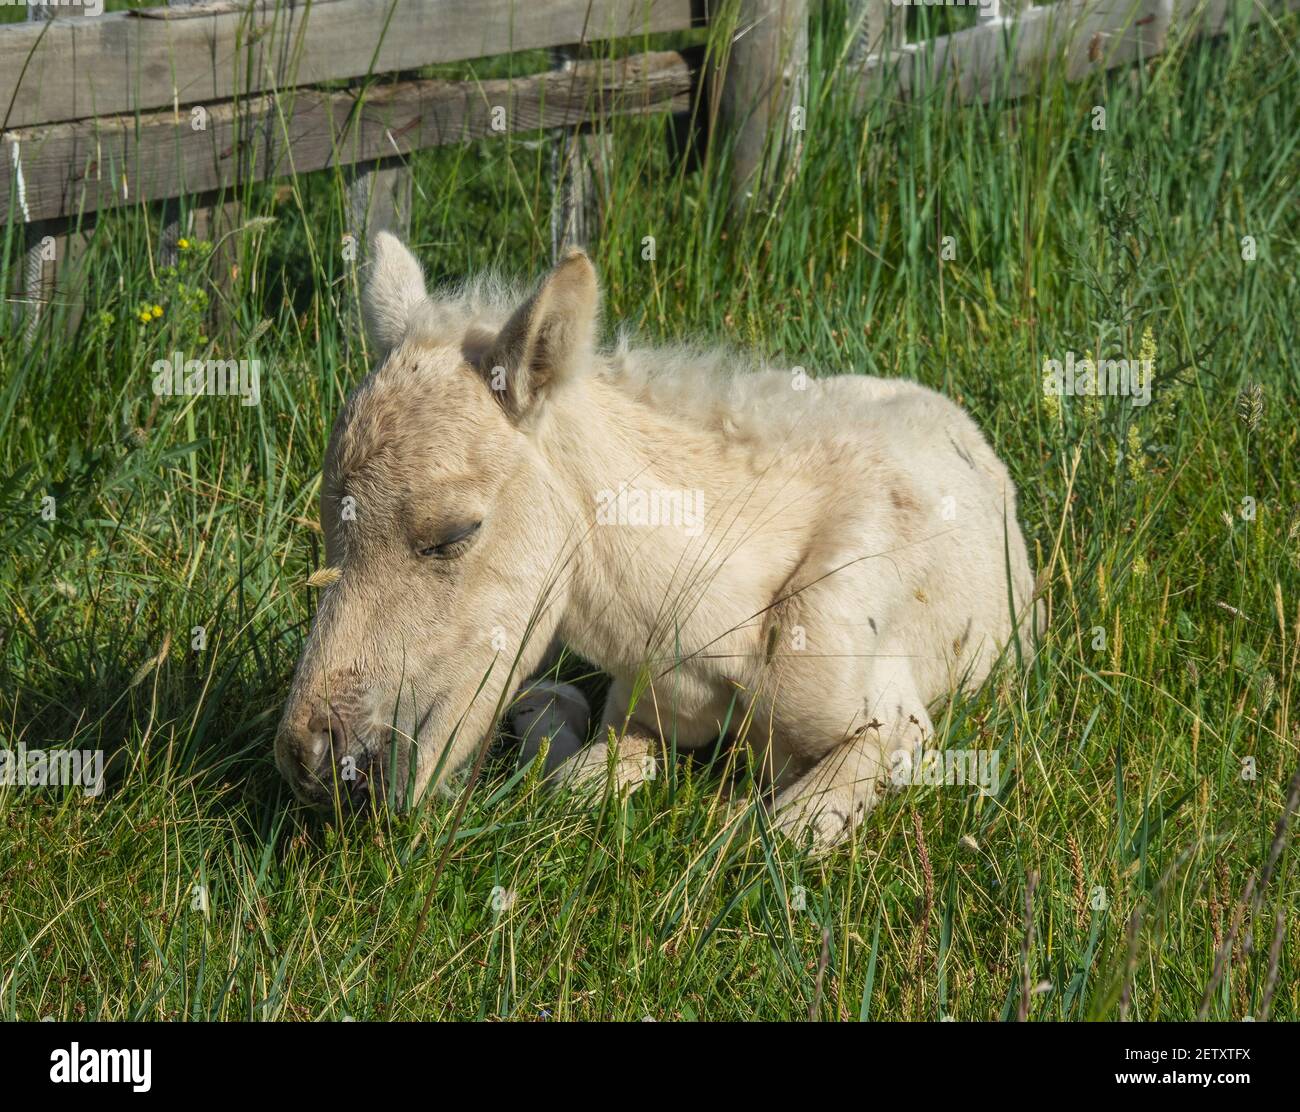 Sleeping newborn foal lying in grass Banque D'Images